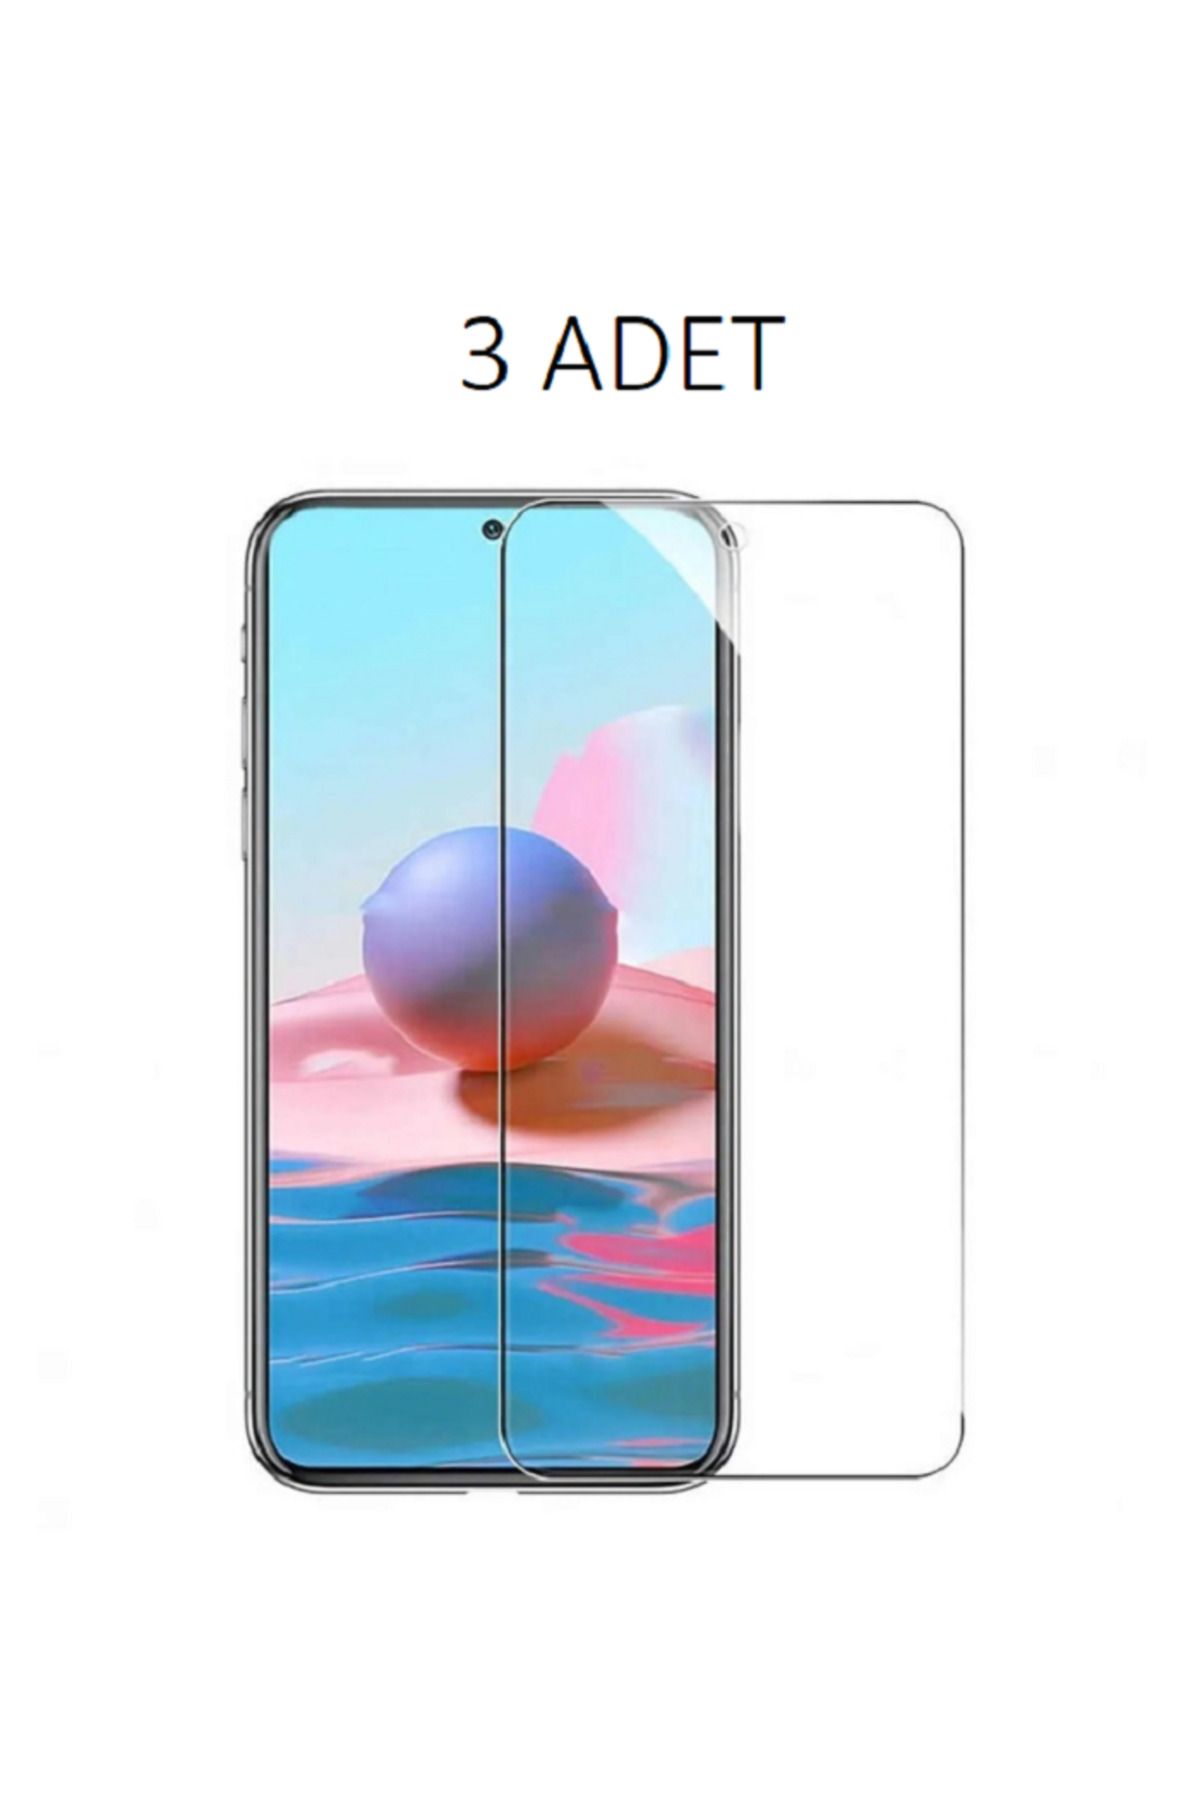 realme 3 ADET Realme 5 Pro Uyumlu Şeffaf Esnek Nano Ekran Koruyucu